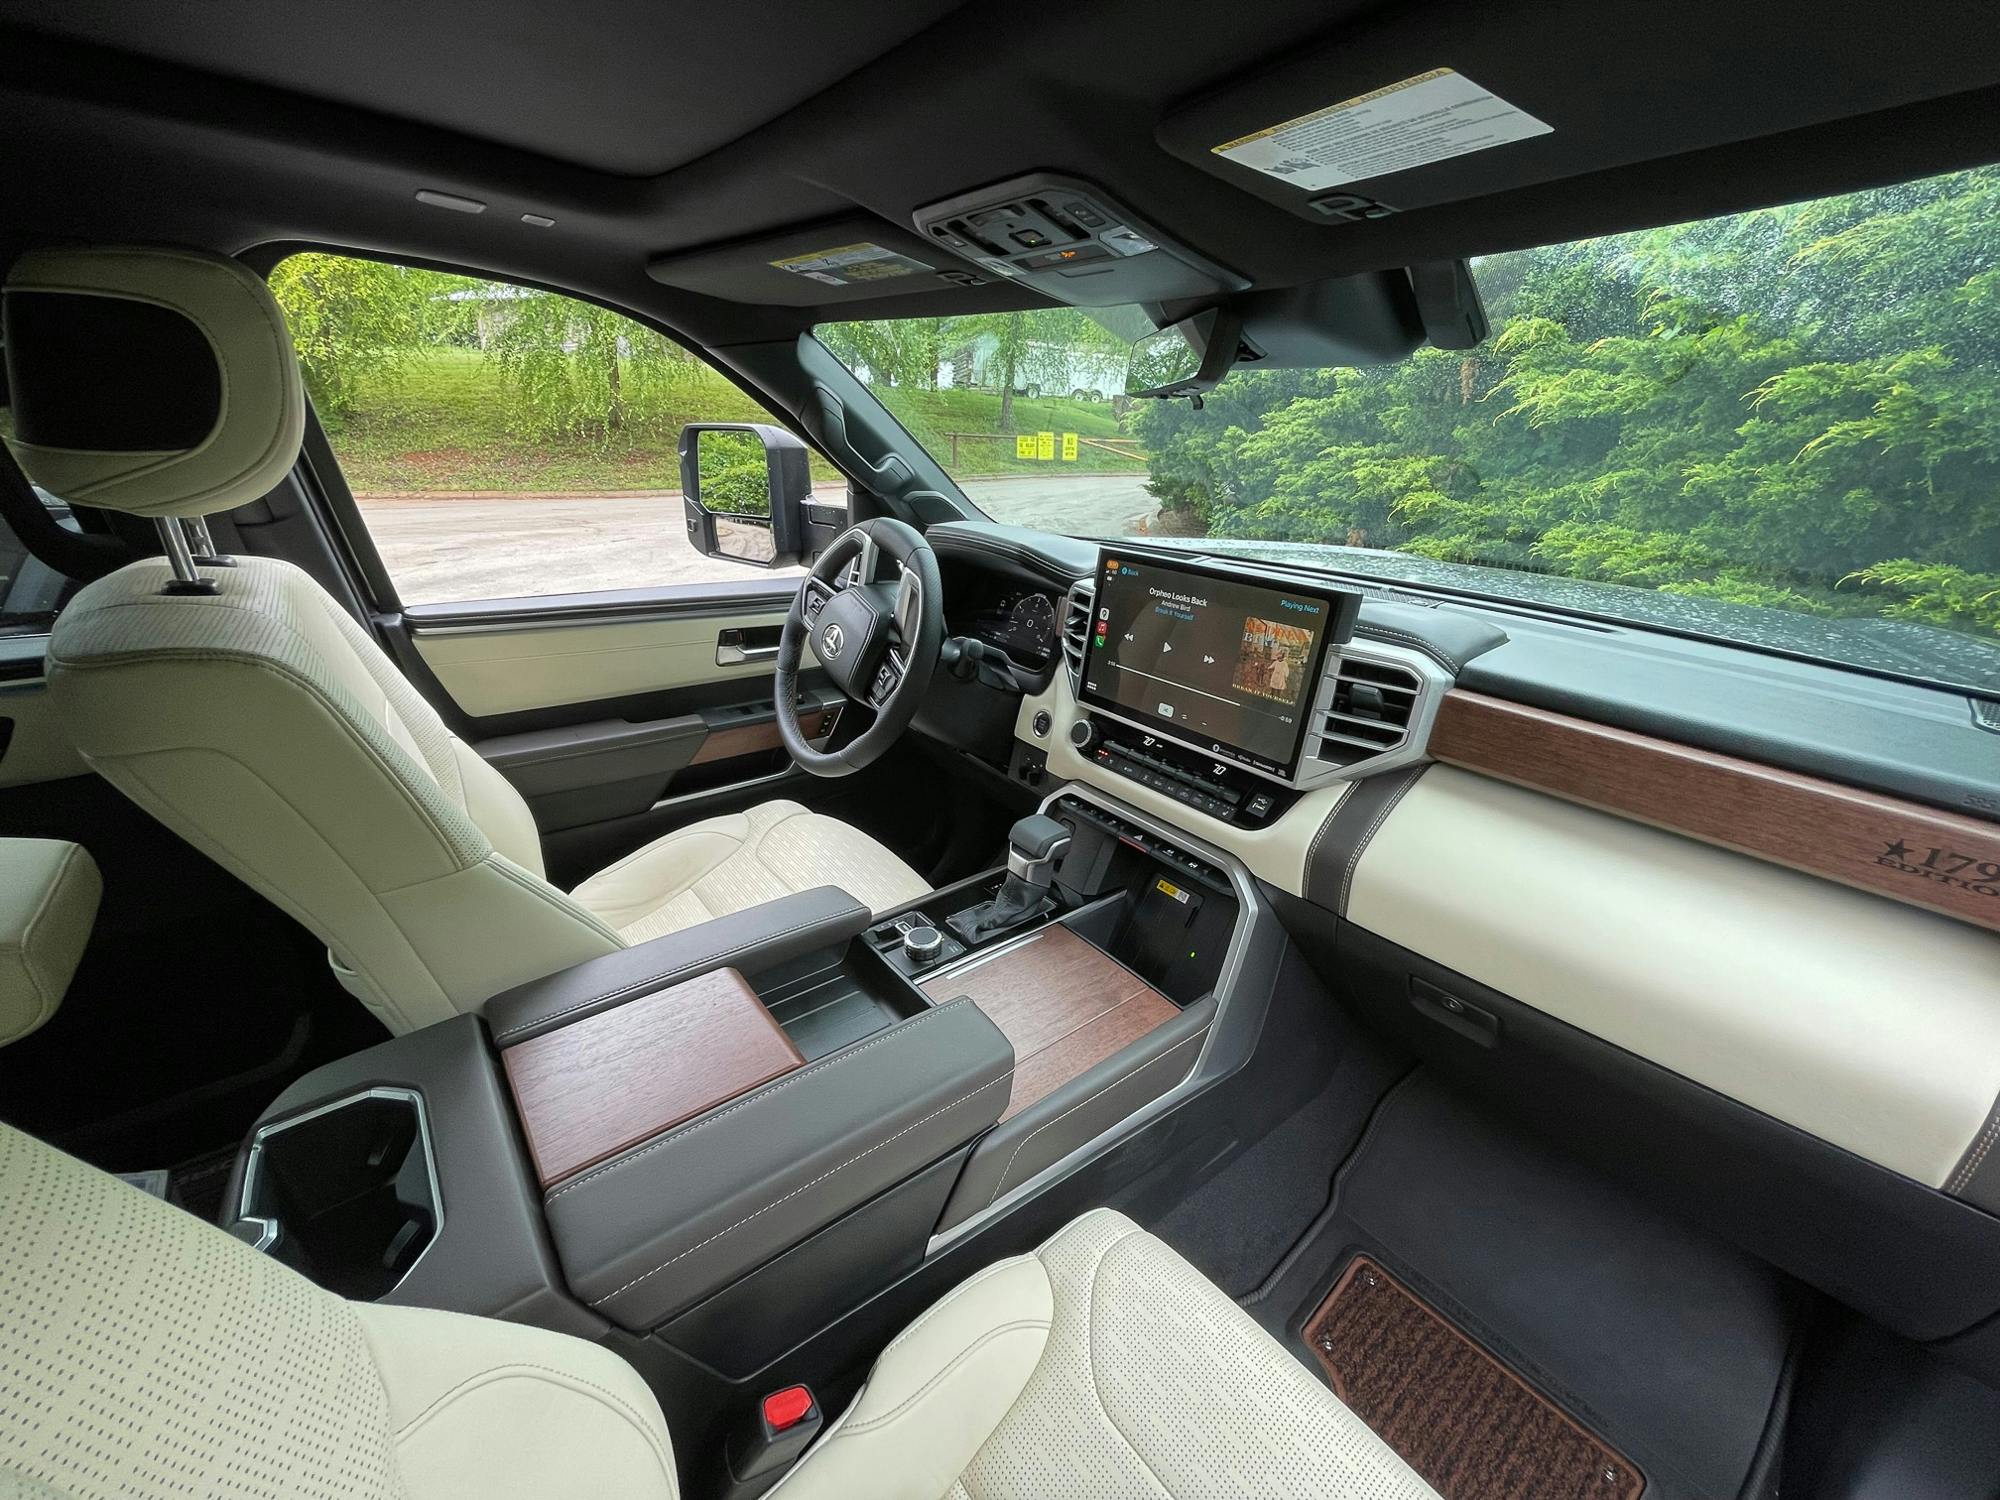 2022 Toyota Tundra 4×4 1794 Edition interior